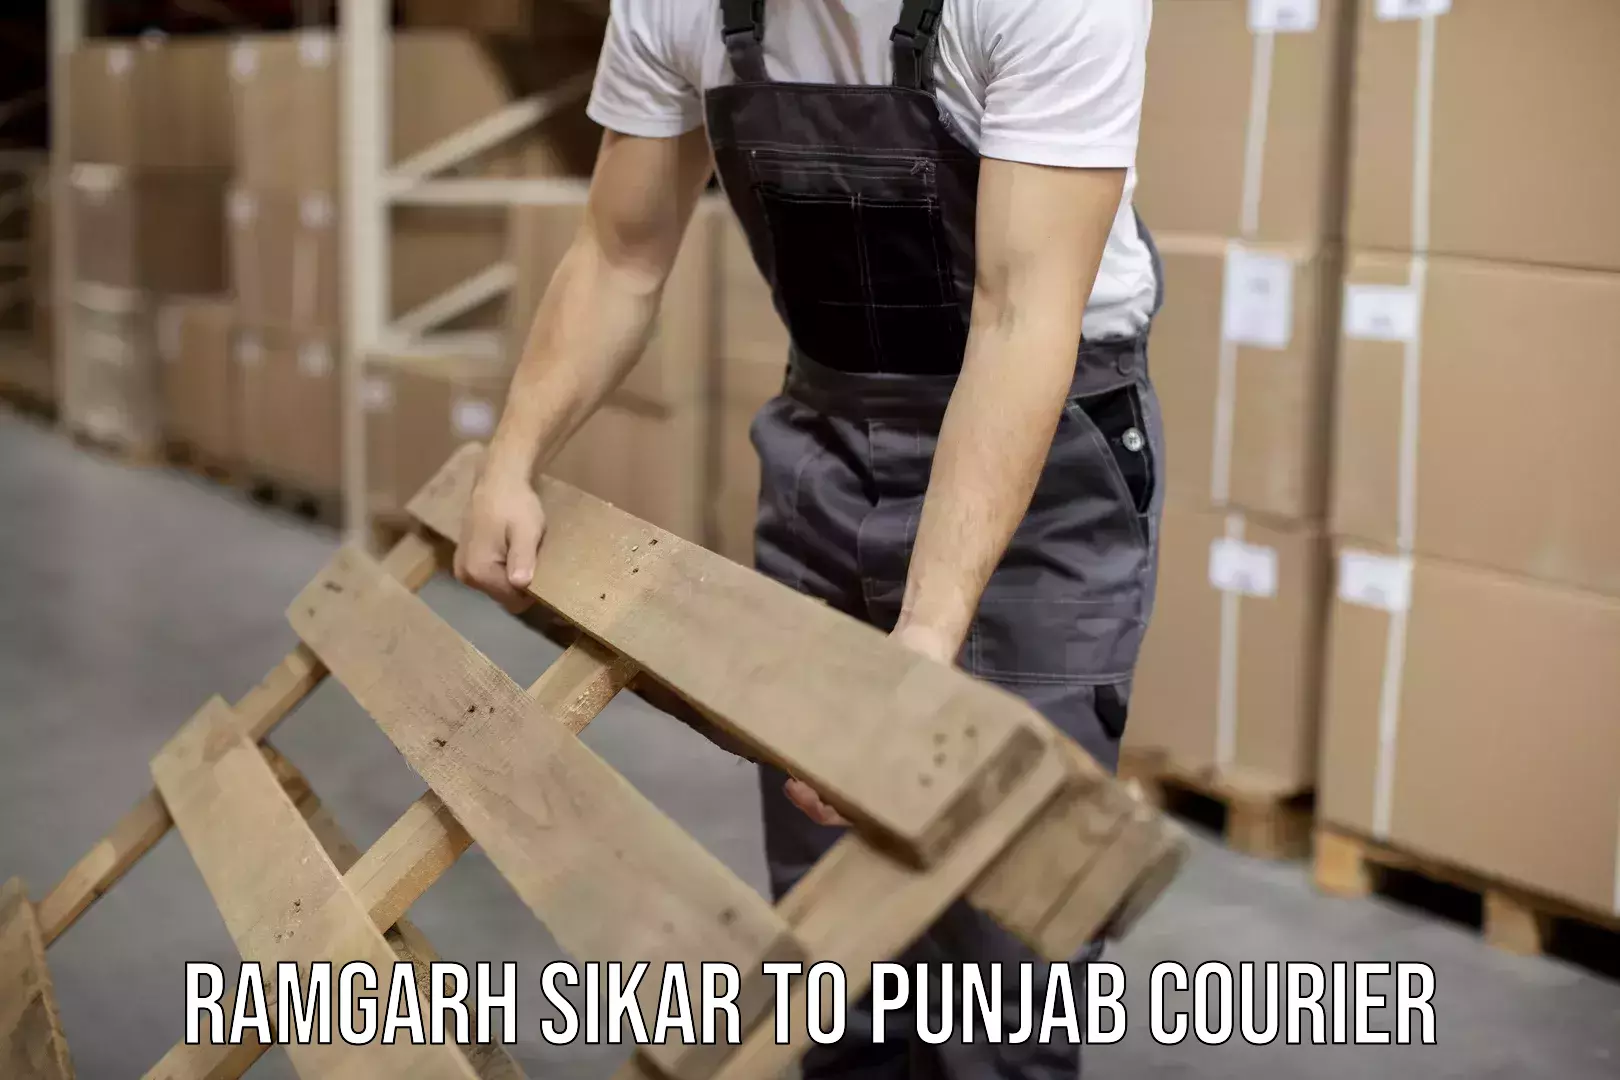 Global parcel delivery Ramgarh Sikar to Punjab